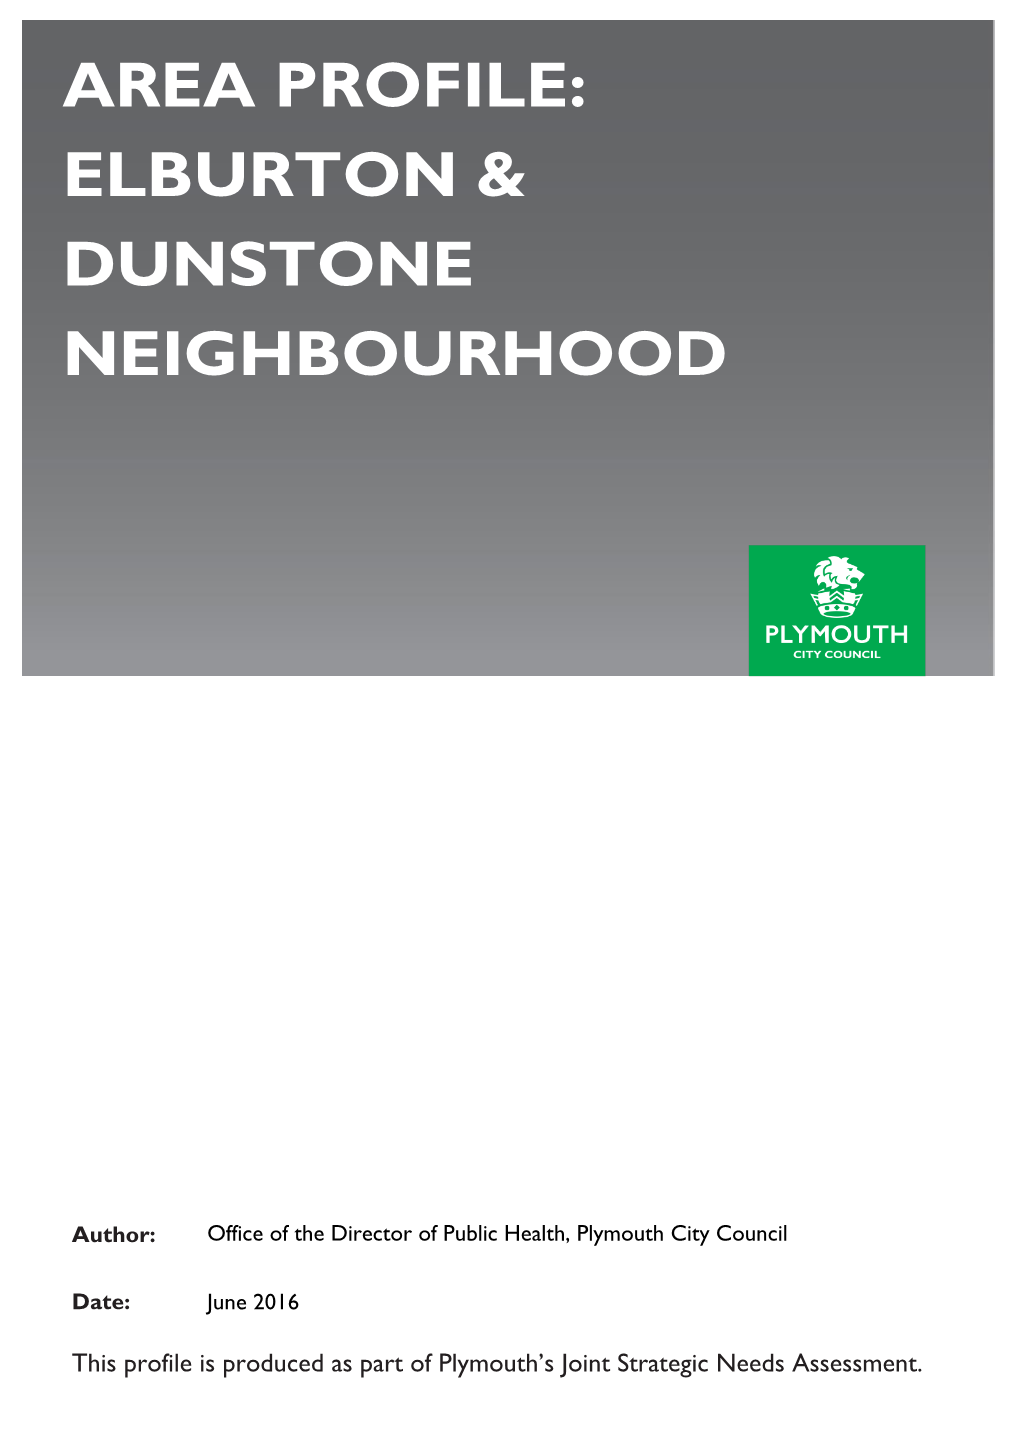 Elburton & Dunstone Neighbourhood